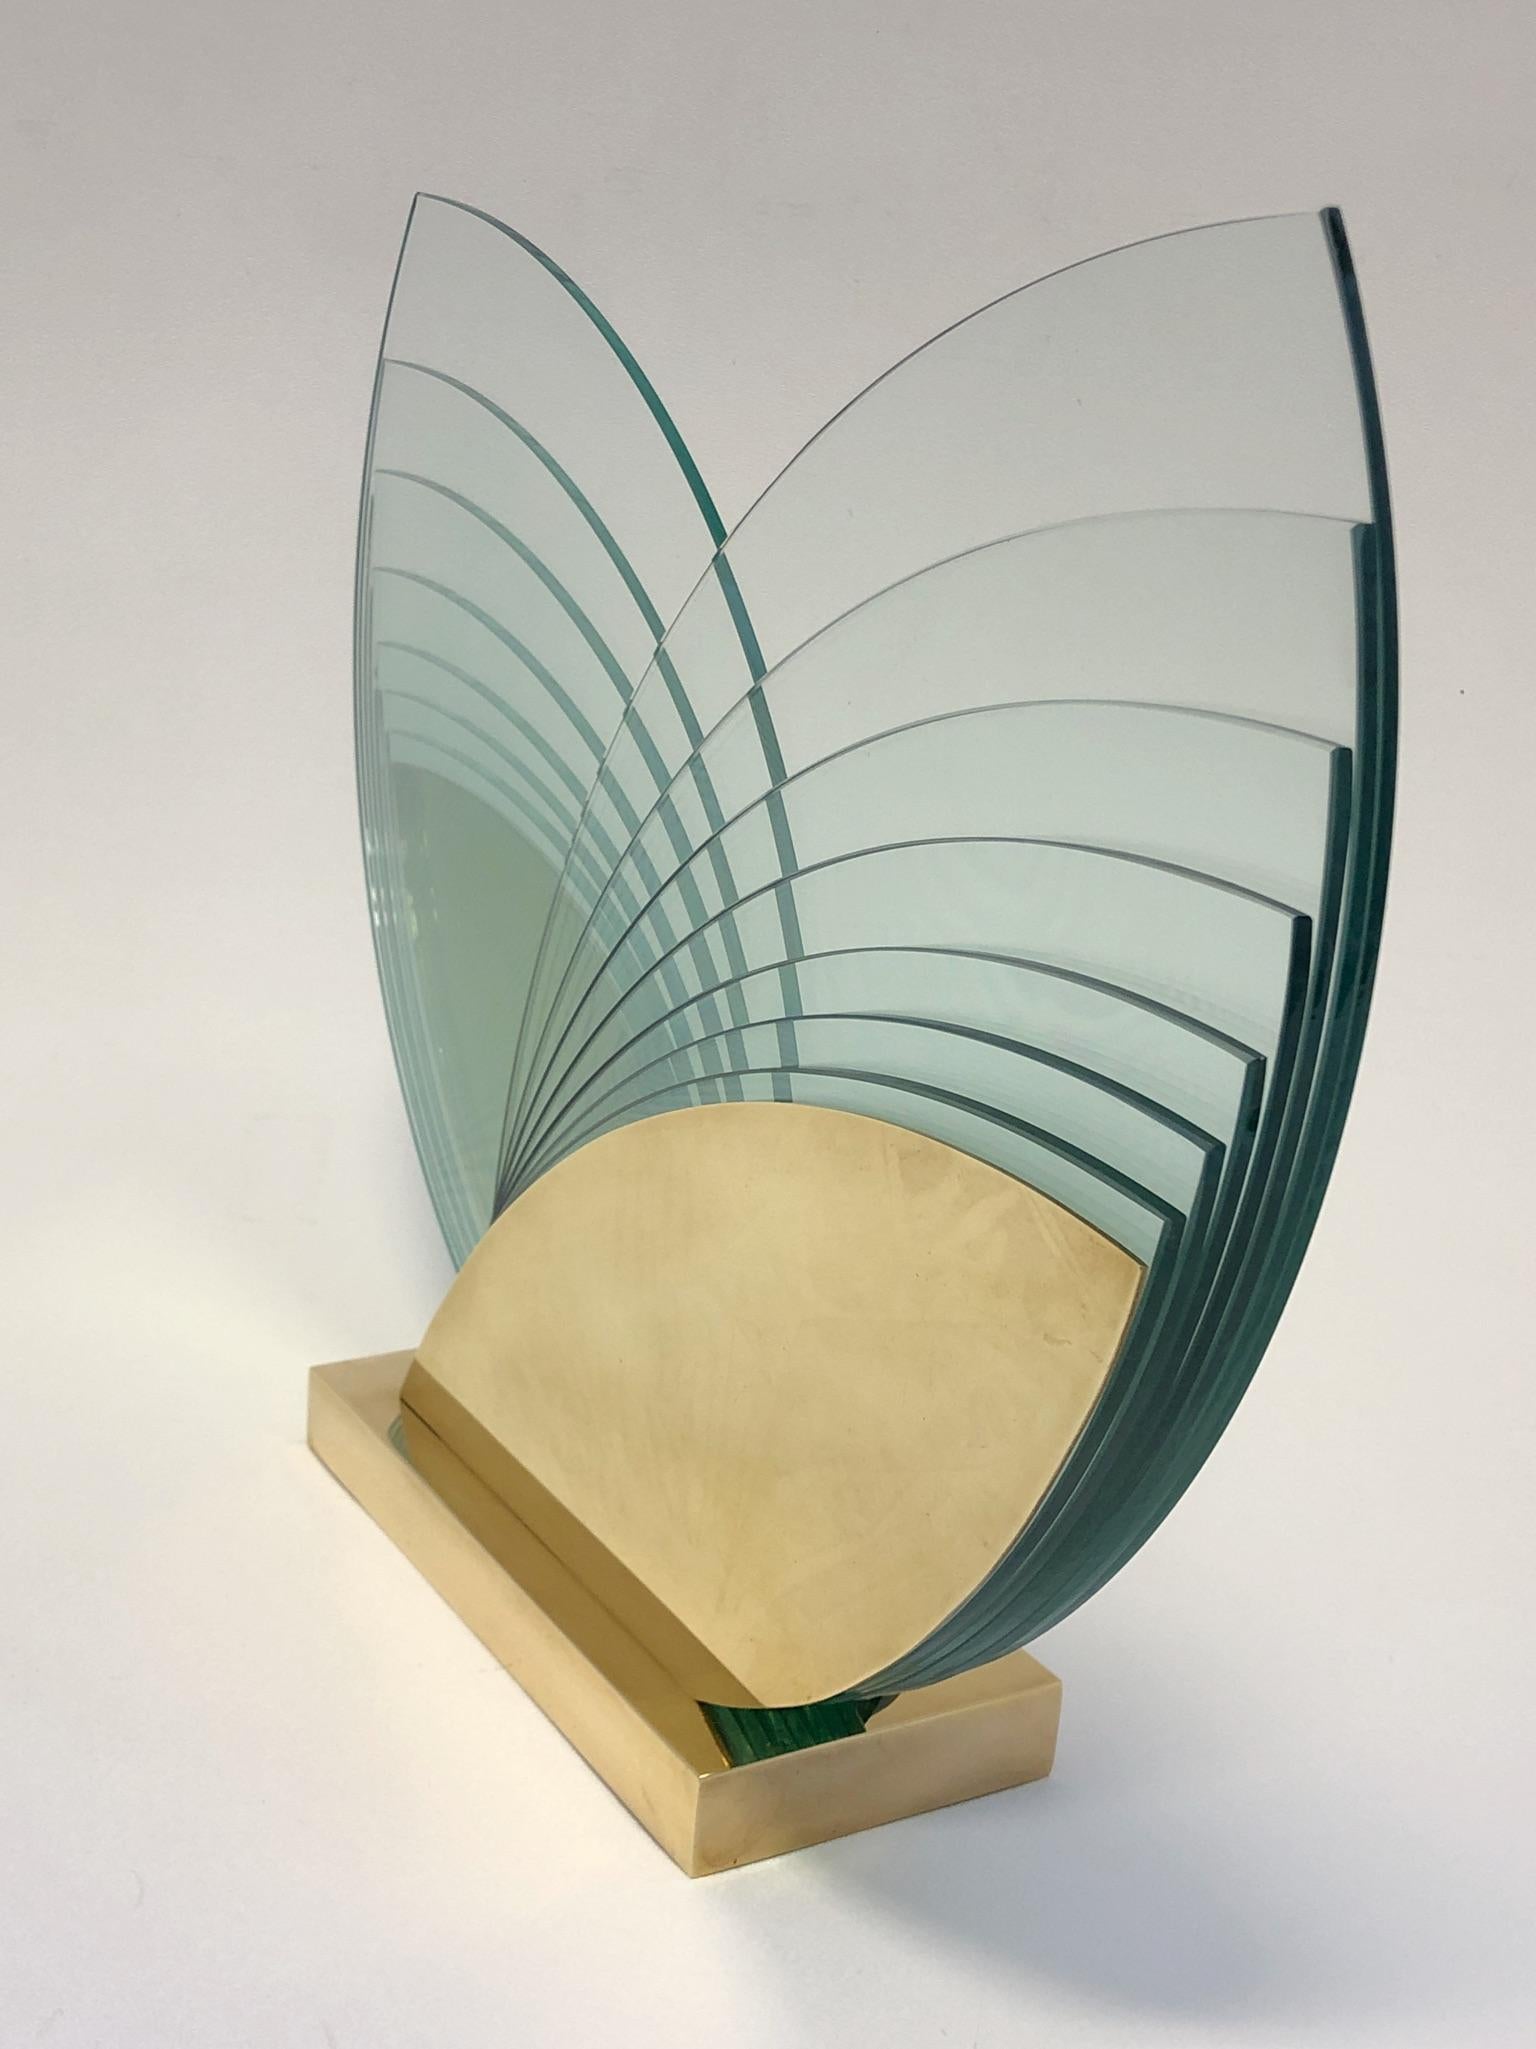 Polished Brass and Glass Sculpture by Runstadler Studios